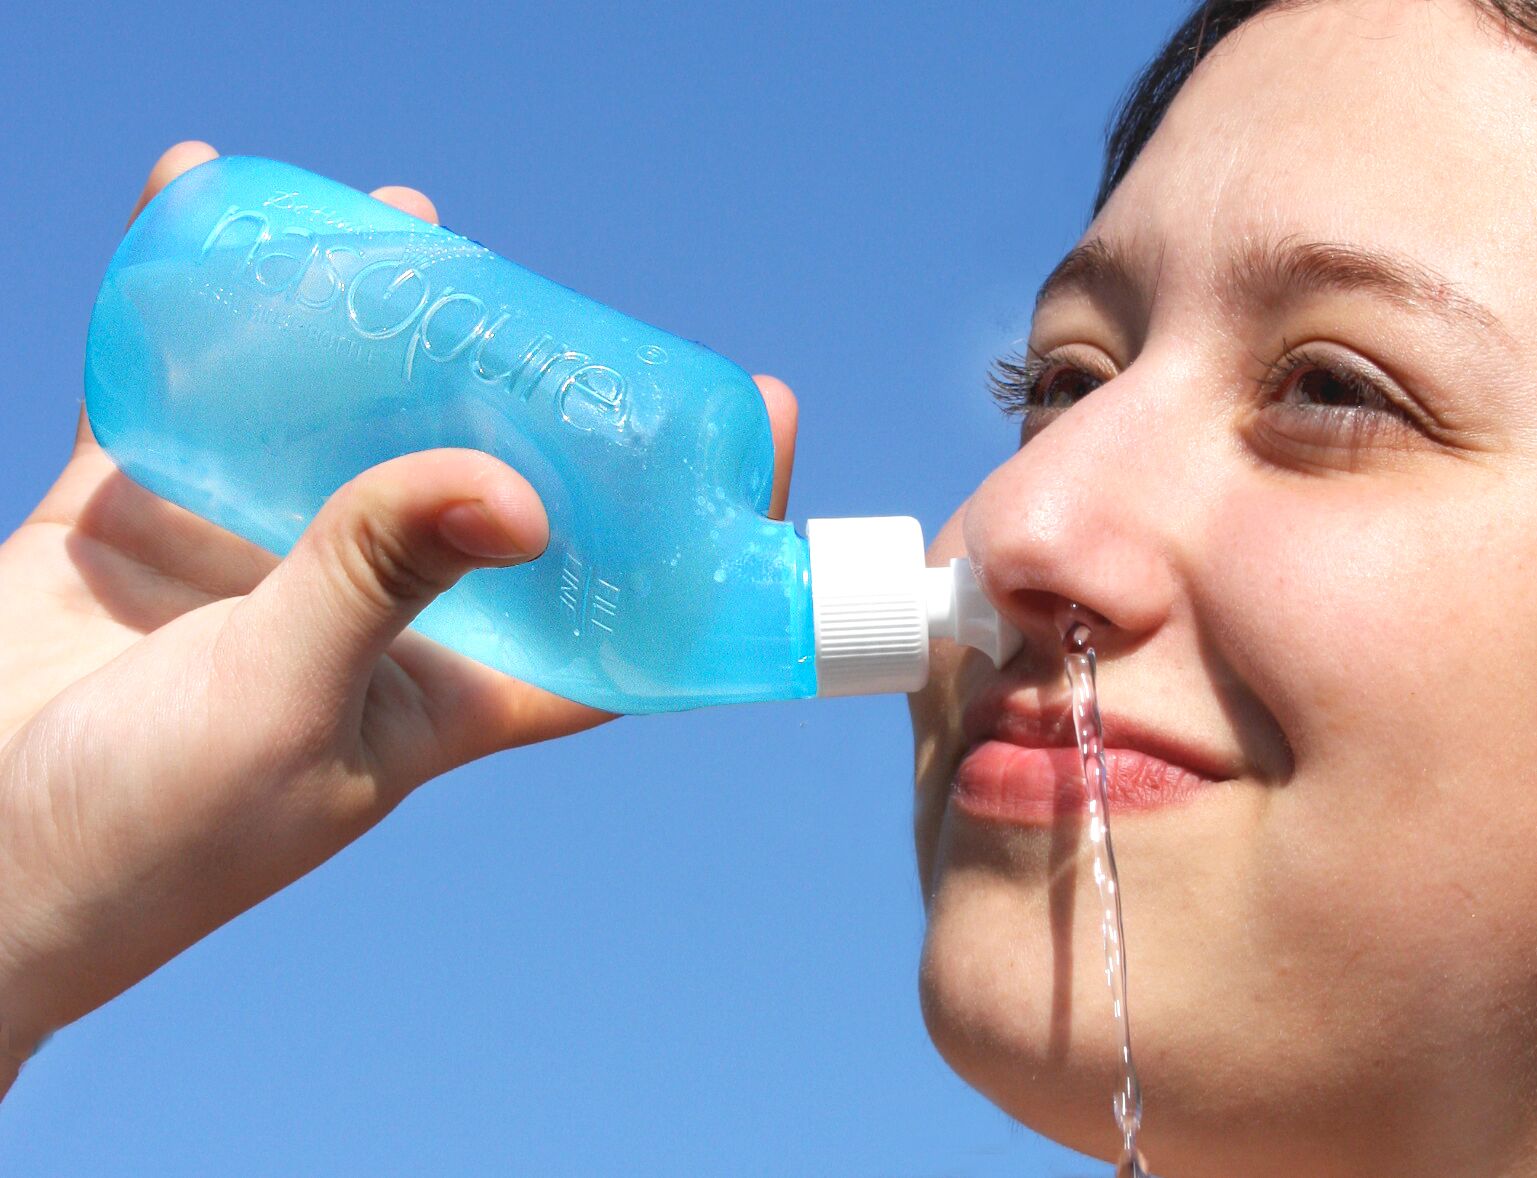 Сопли водичка. Промывание носа. Промывалка для носа. Полоскание носа. Вода для промывания носа.